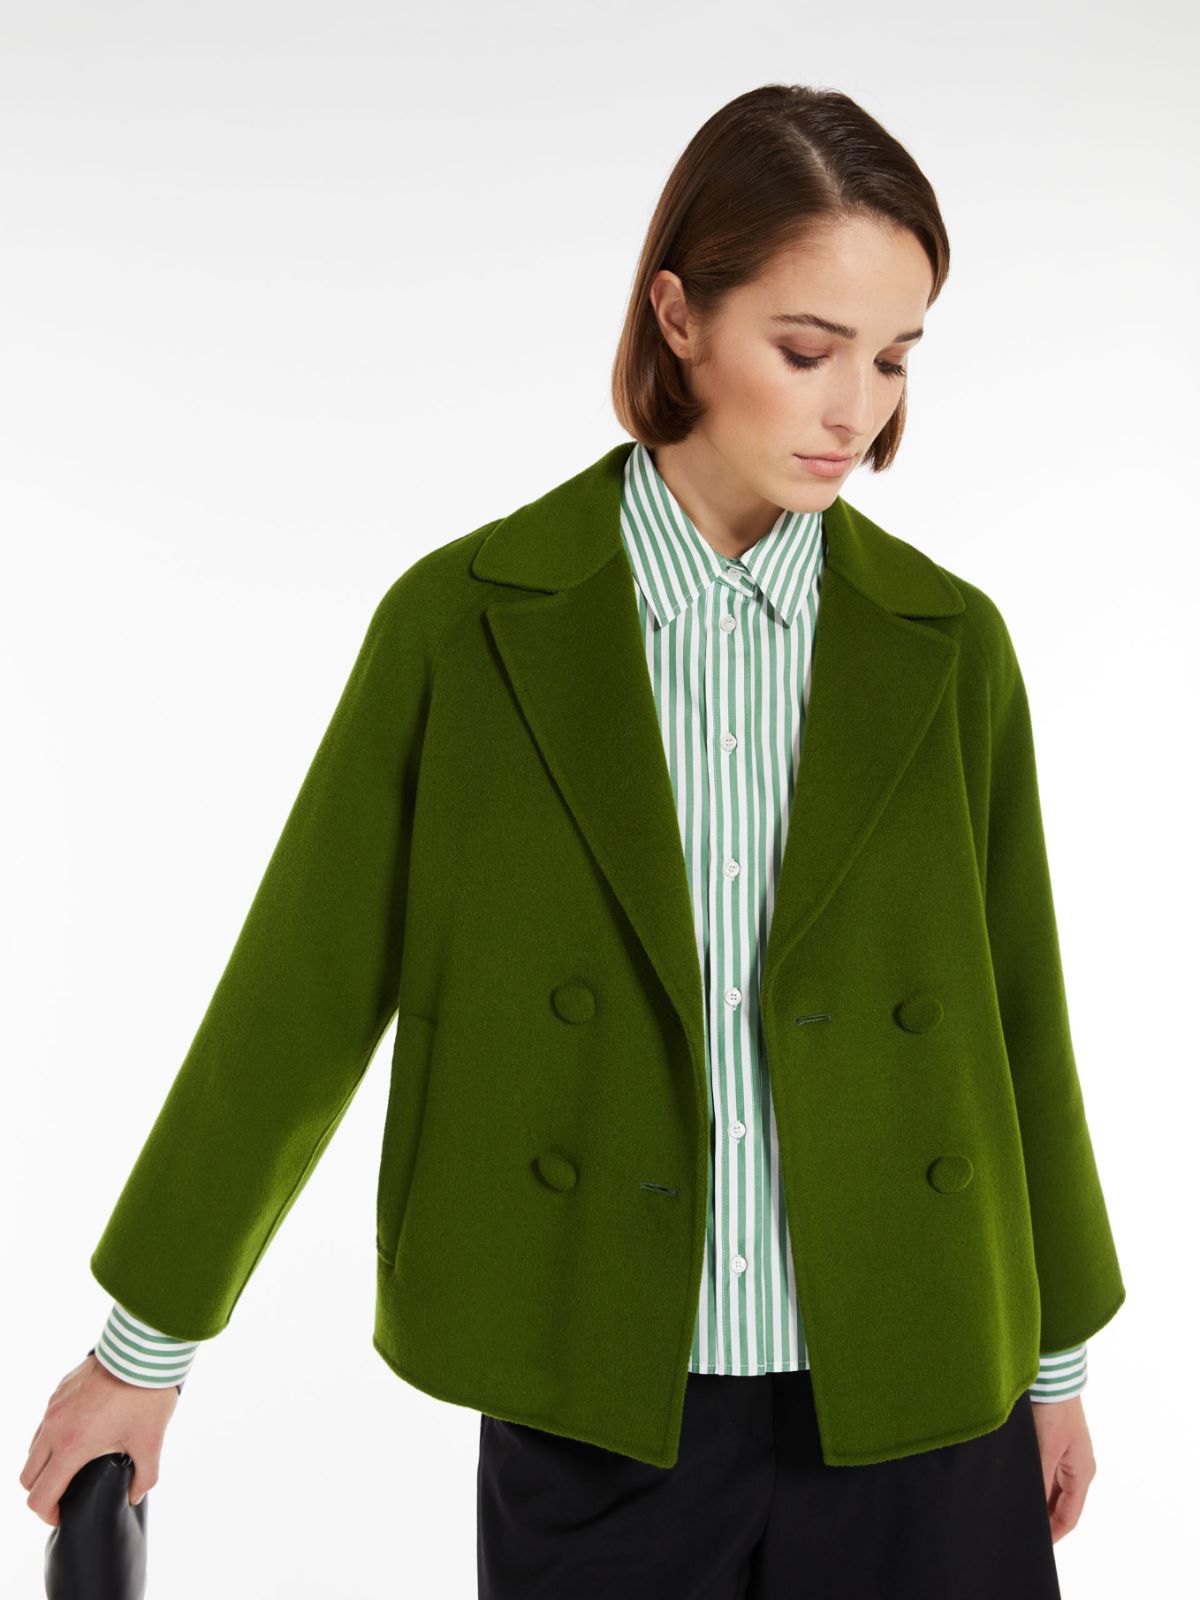 Double-breasted jacket in wool, green | Weekend Max Mara